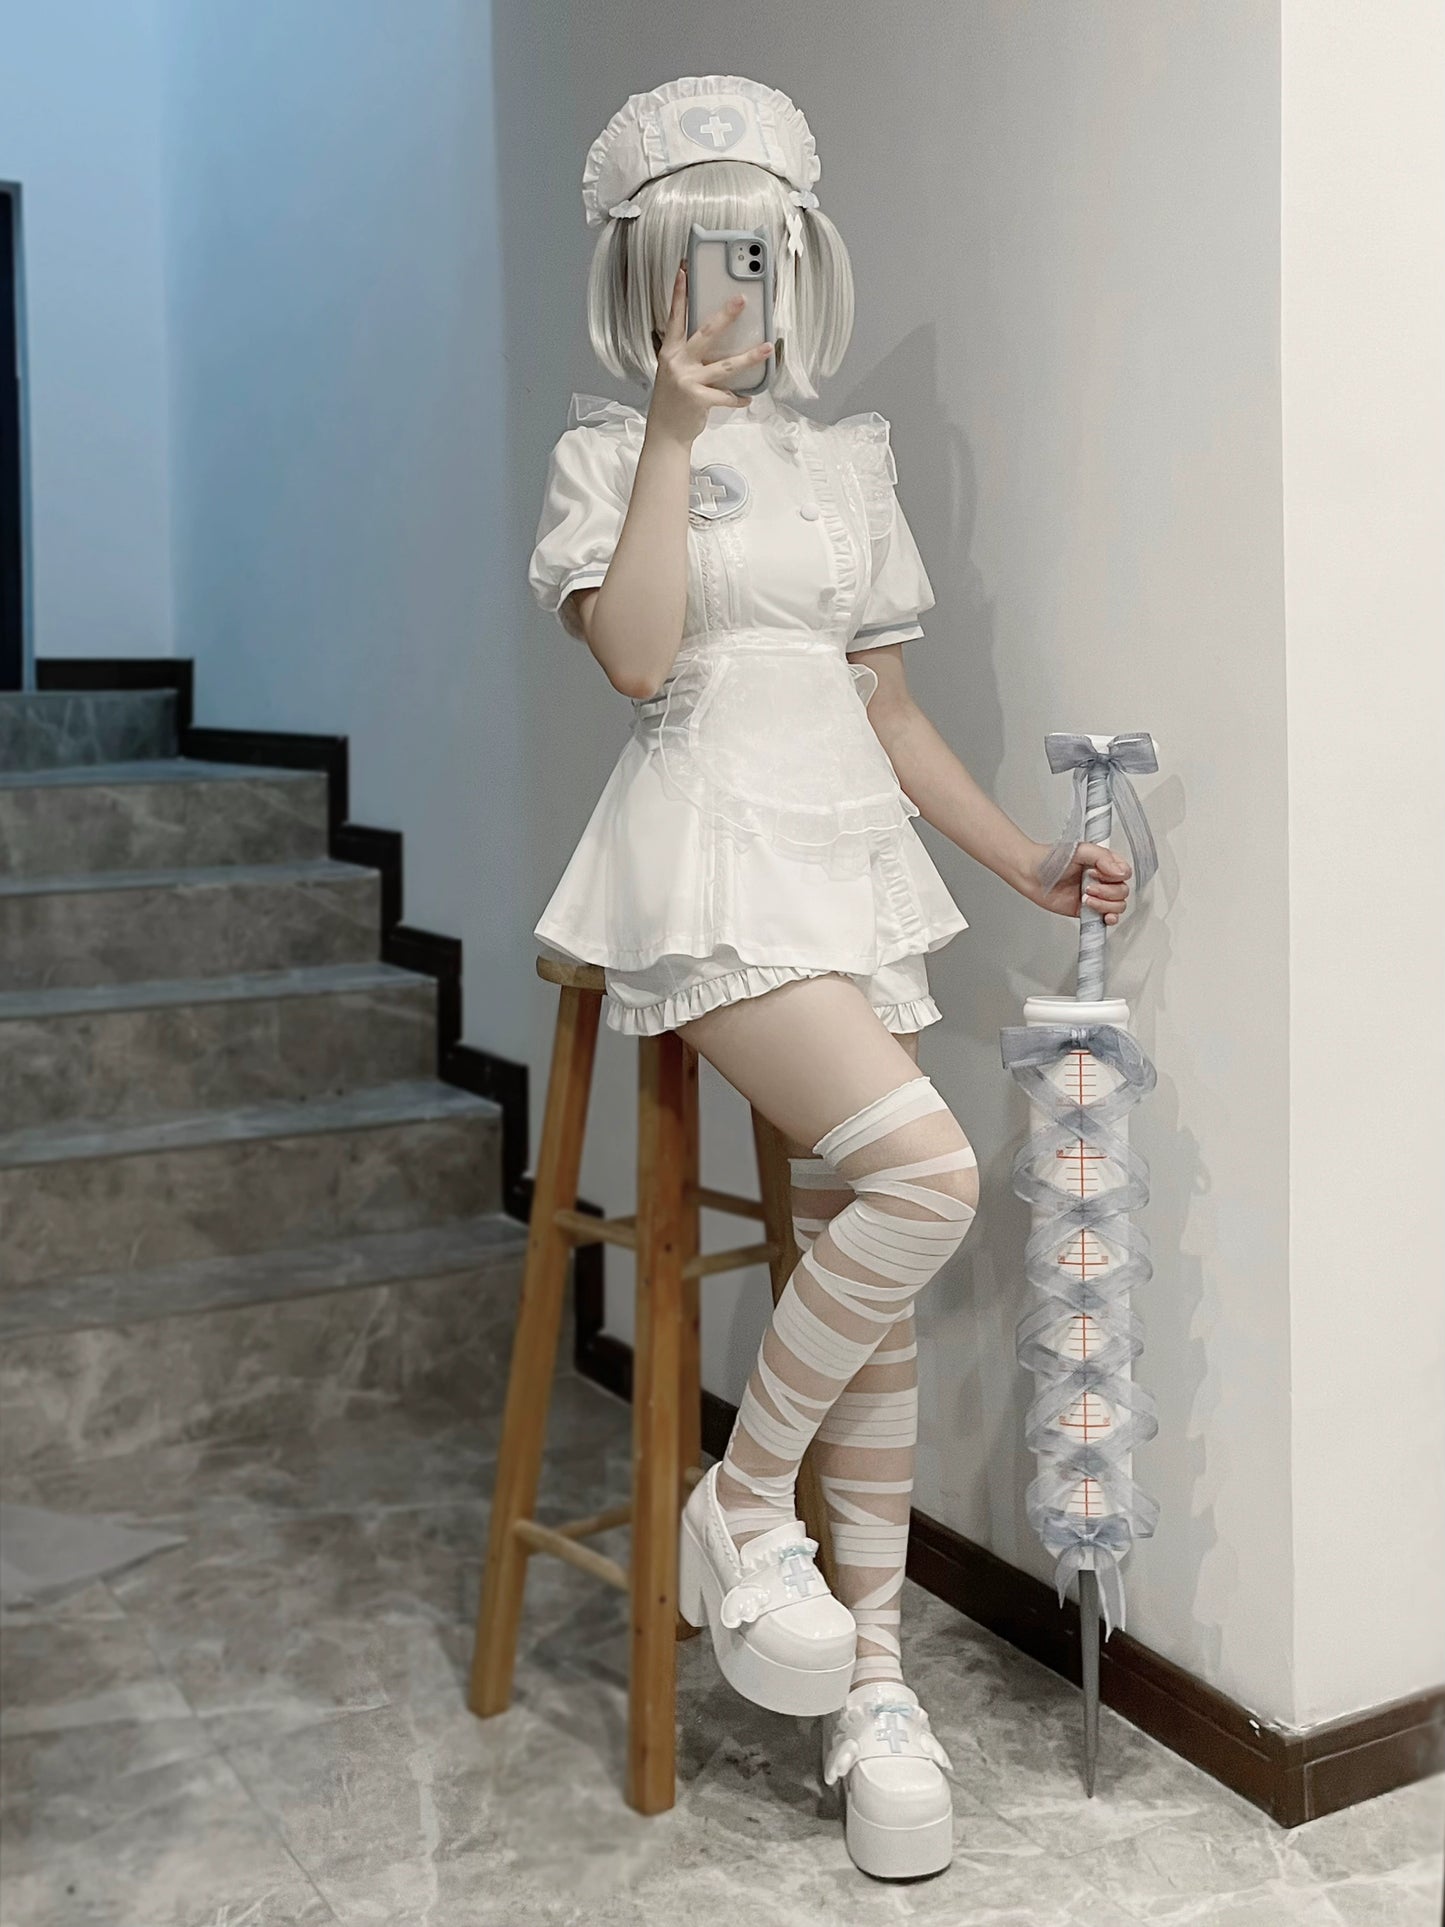 Tenshi Kaiwai Dress Set Nurse Medical Series Outfit Sets 37460:559960